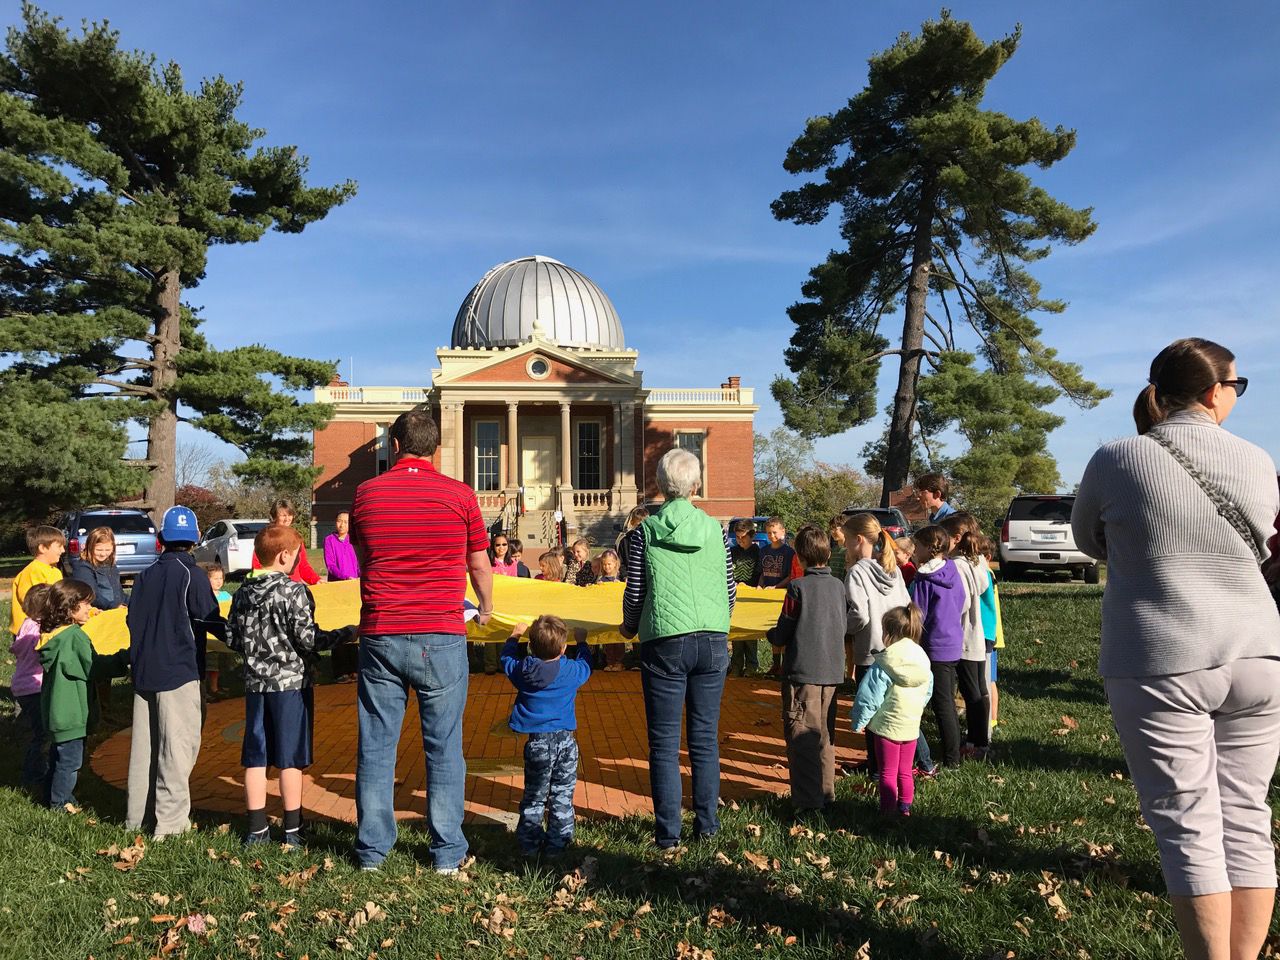 A family event outside the Cincinnati Observatory. (Photo courtesy of Cincinnati Observatory)